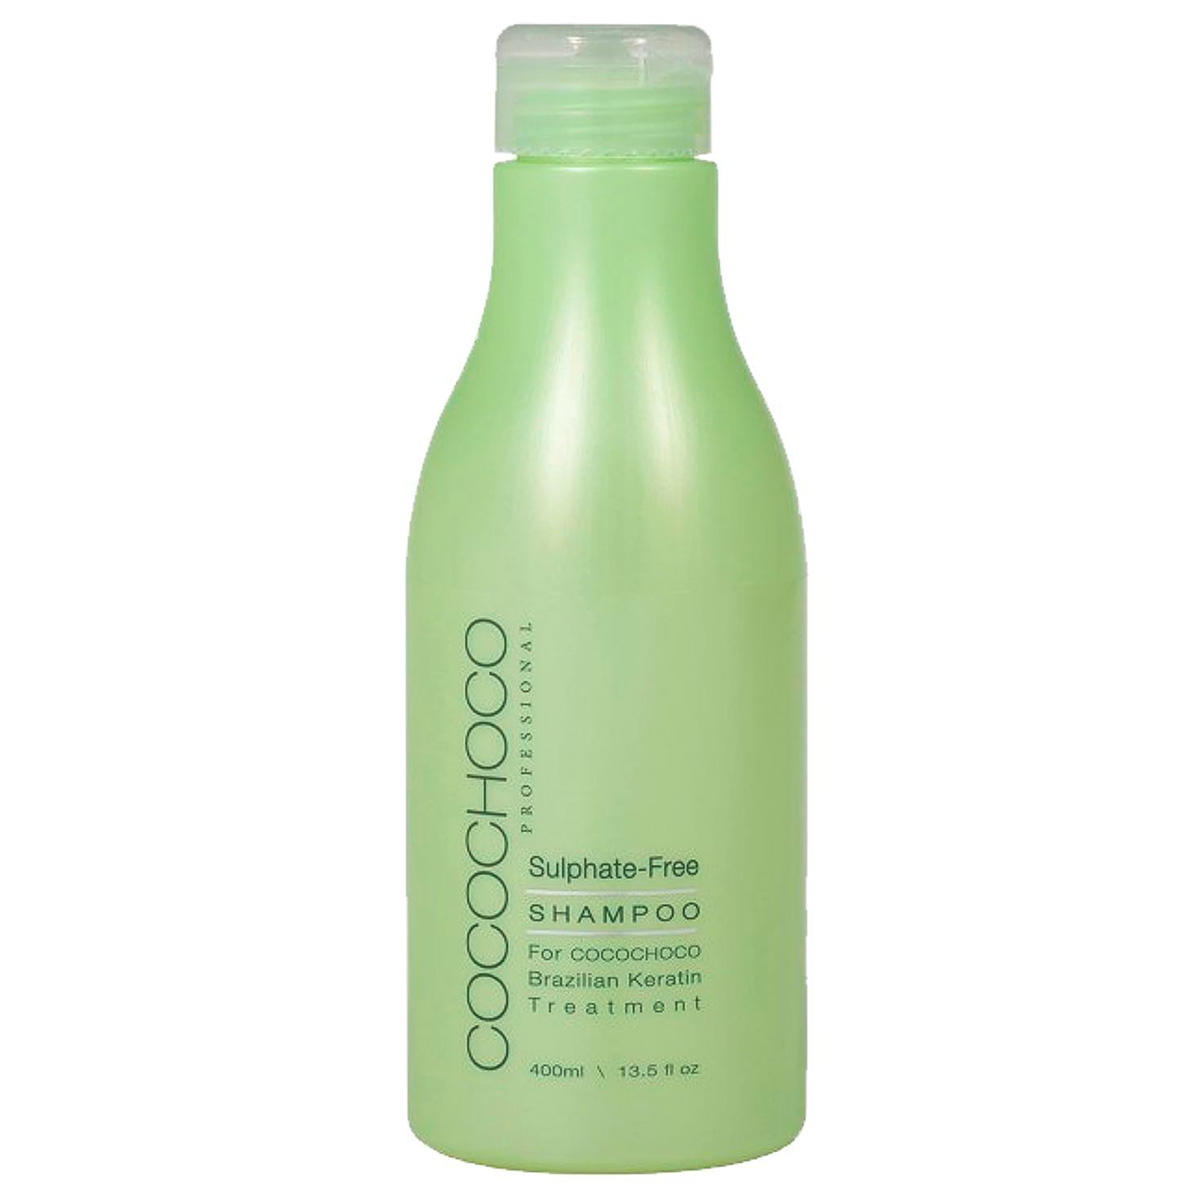 COCOCHOCO Sulphate-Free Shampoo 400 ml - 1